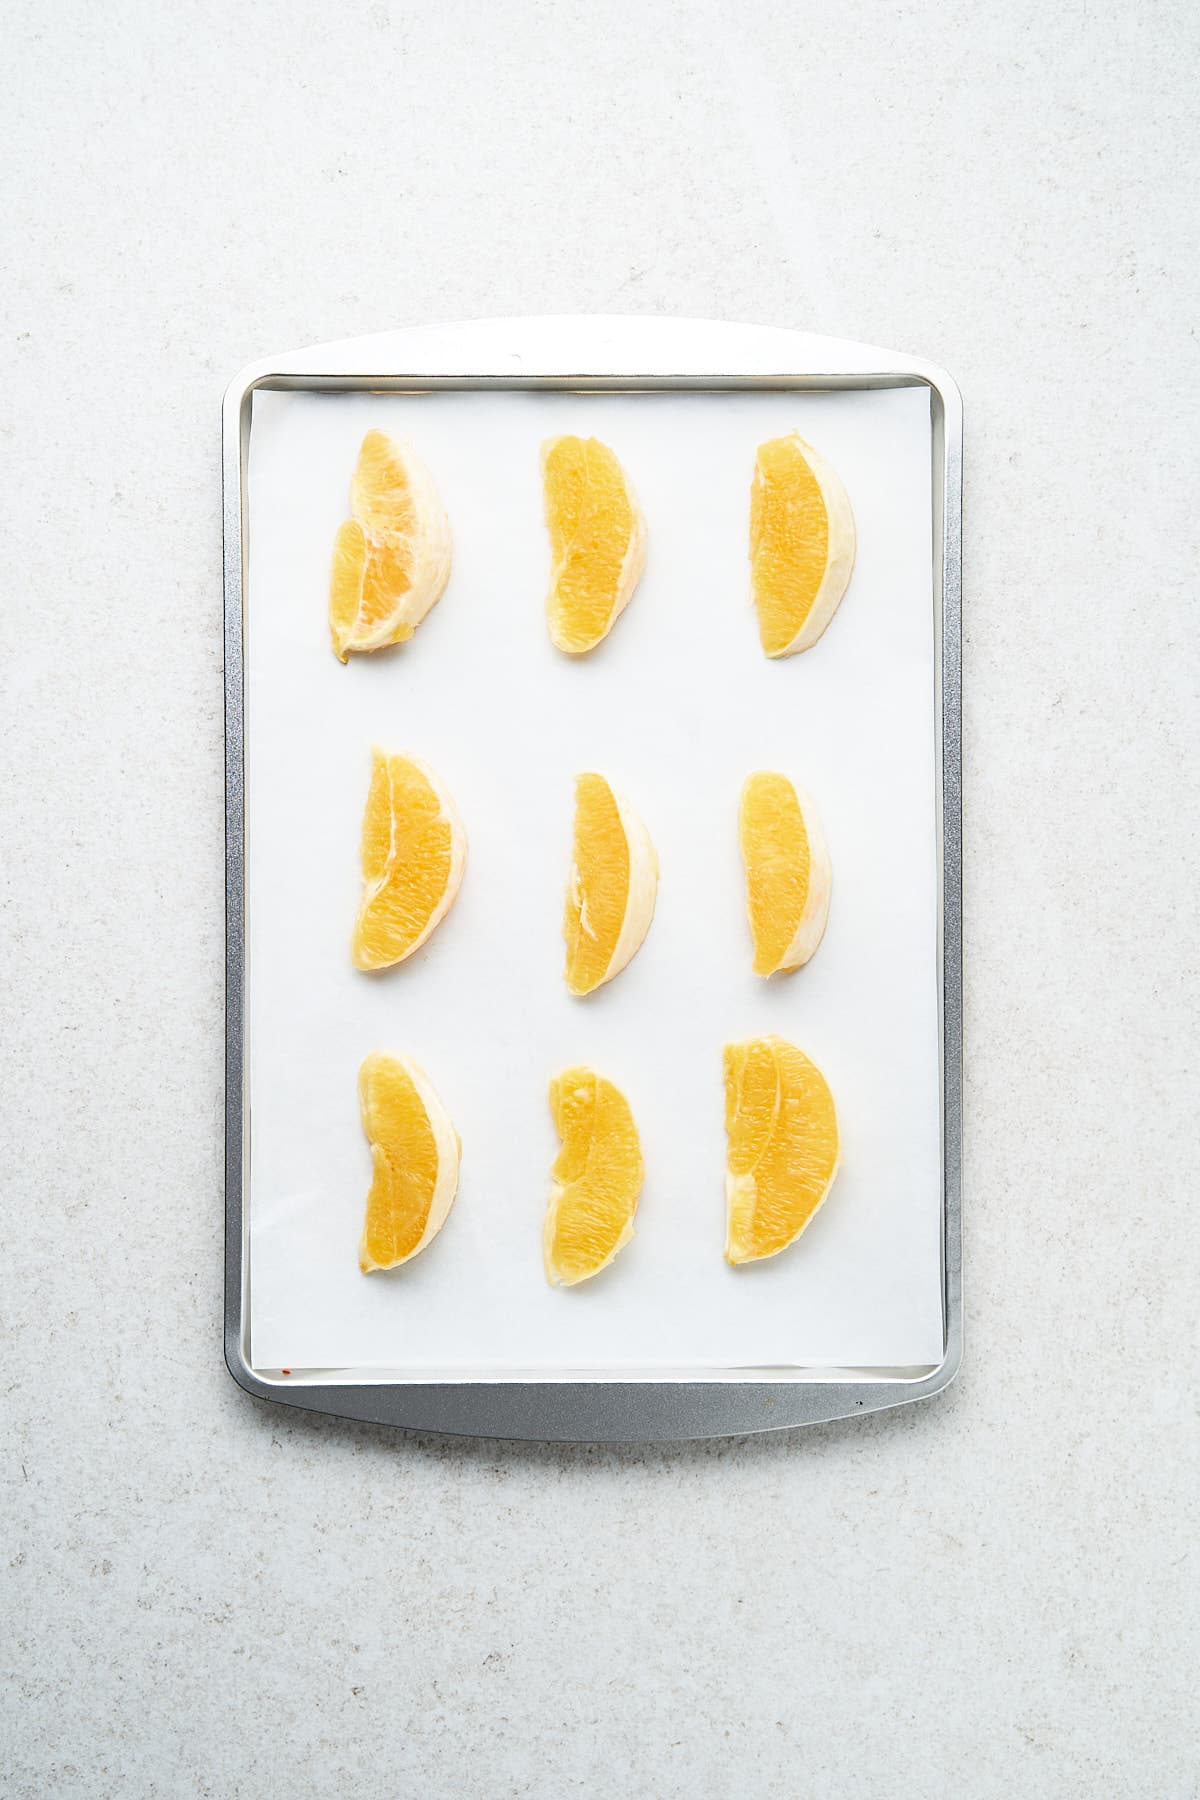 Orange slices on a tray.